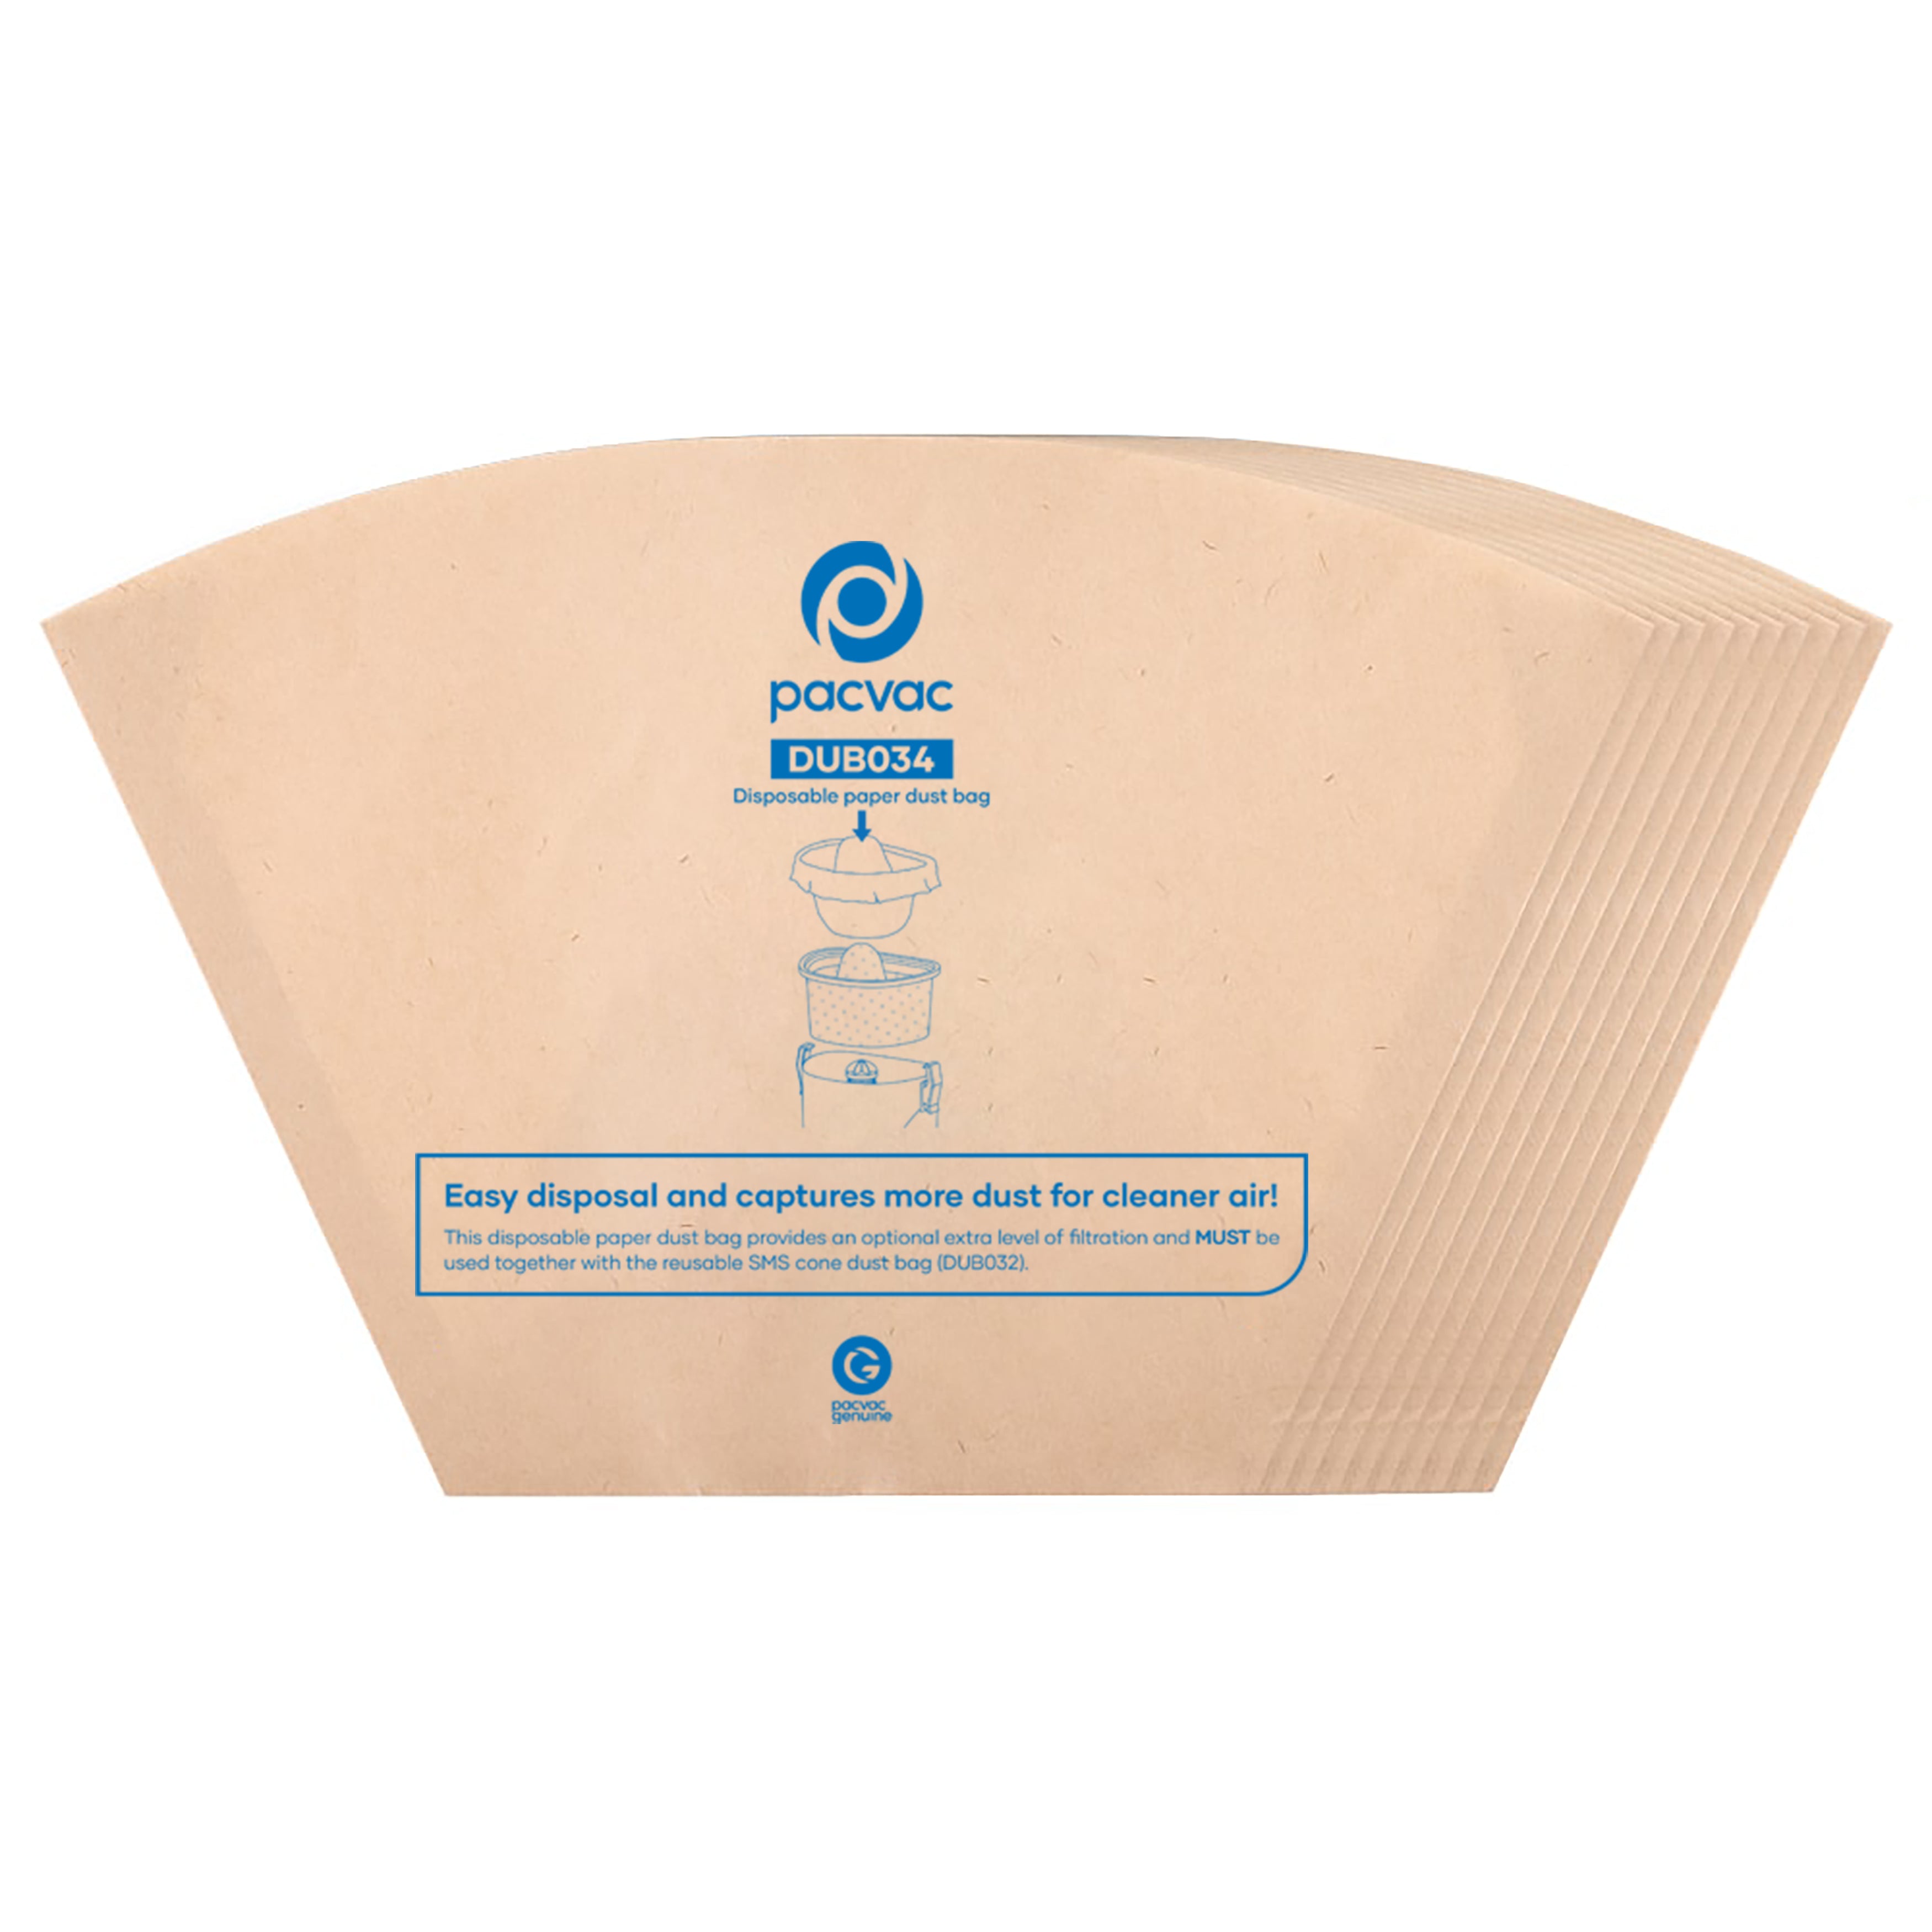 Pacvac Velo Disposable Paper Dust Bags (10) - DUB034